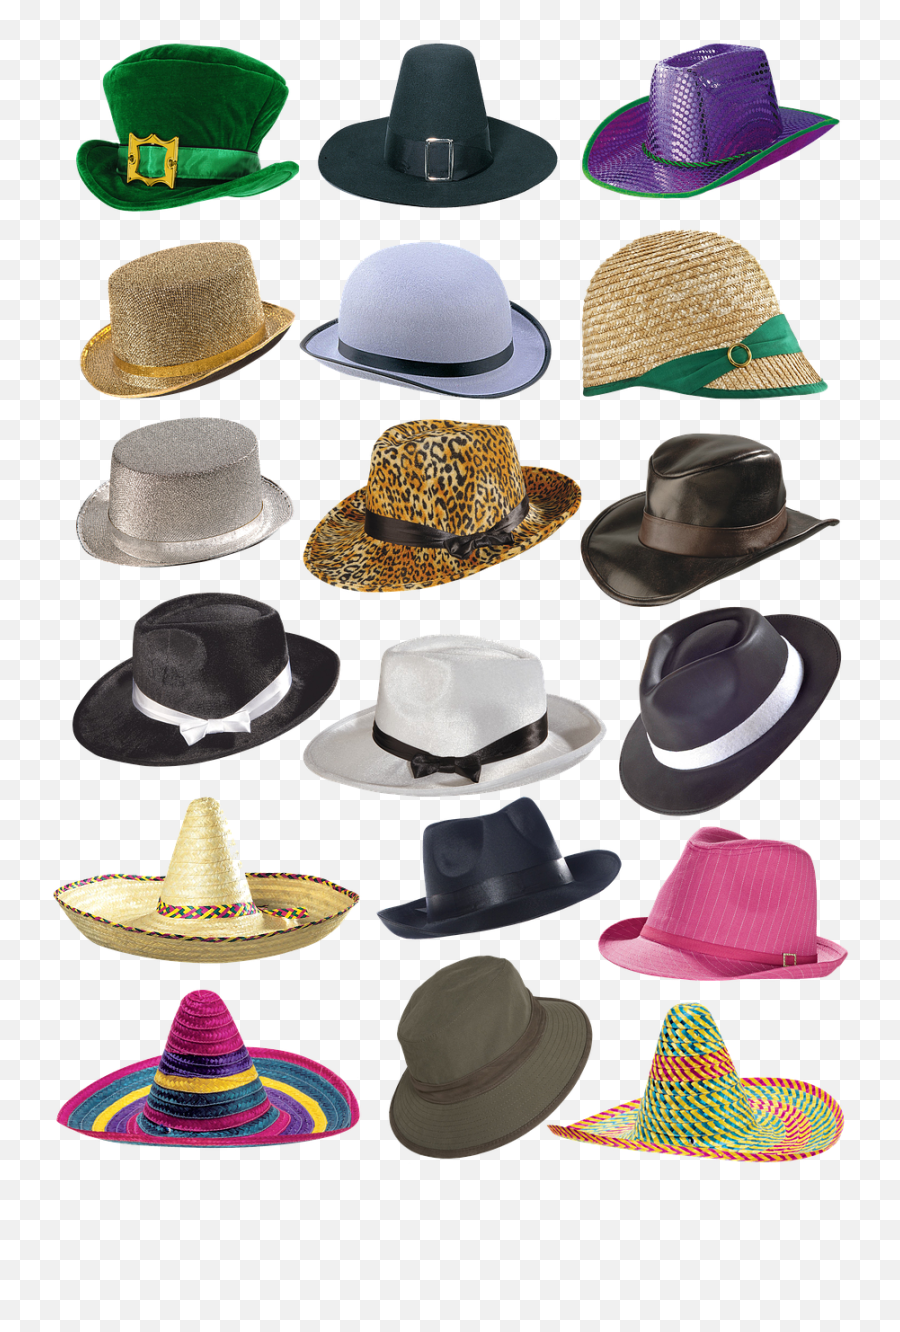 Hat Png - Free Photo On Pixabay 18 Hats,Cowboy Hat Png Transparent